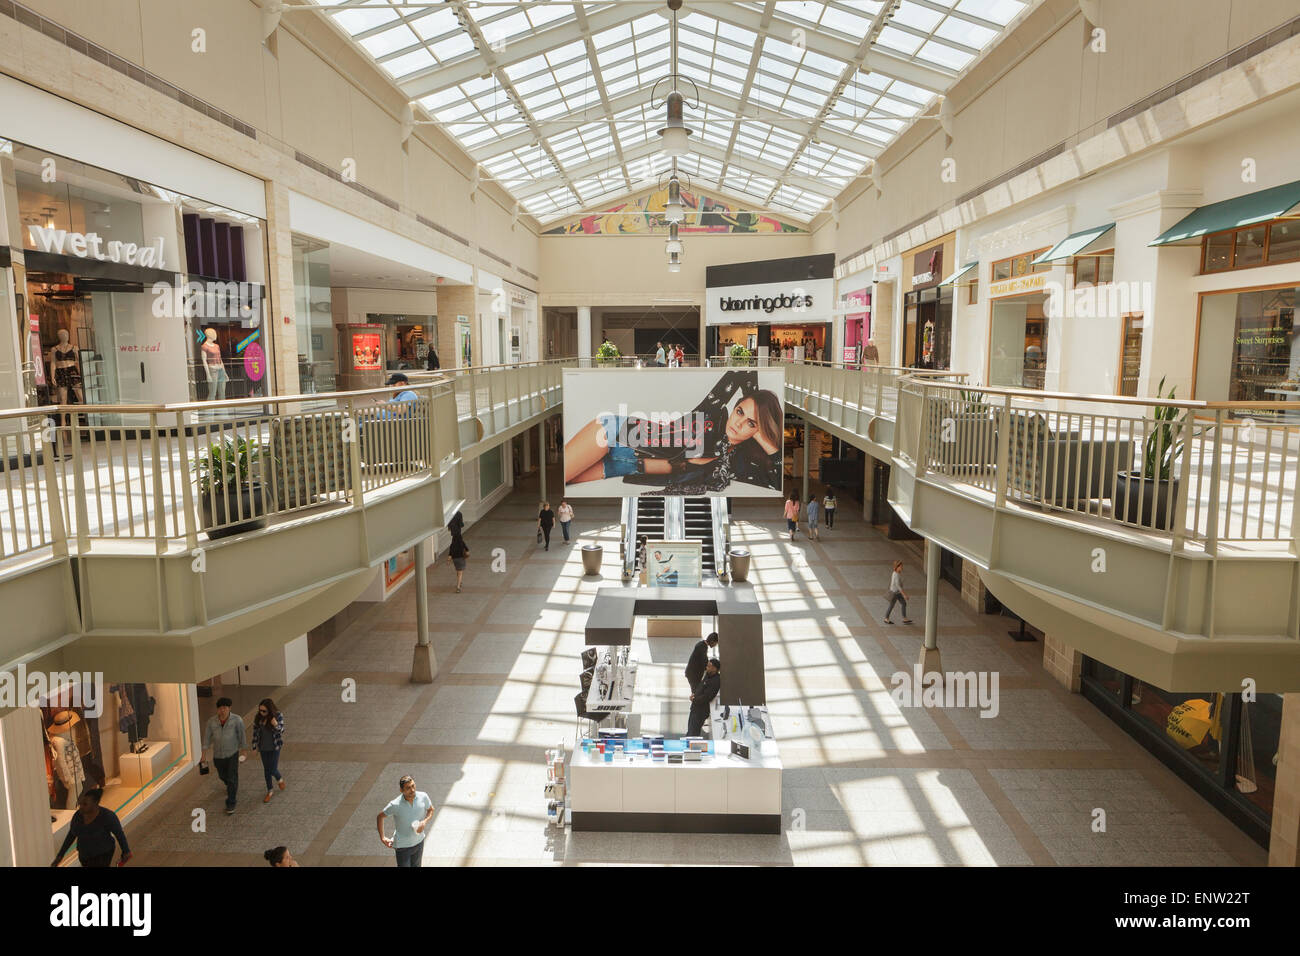 20 Lenox Square Mall Images, Stock Photos & Vectors